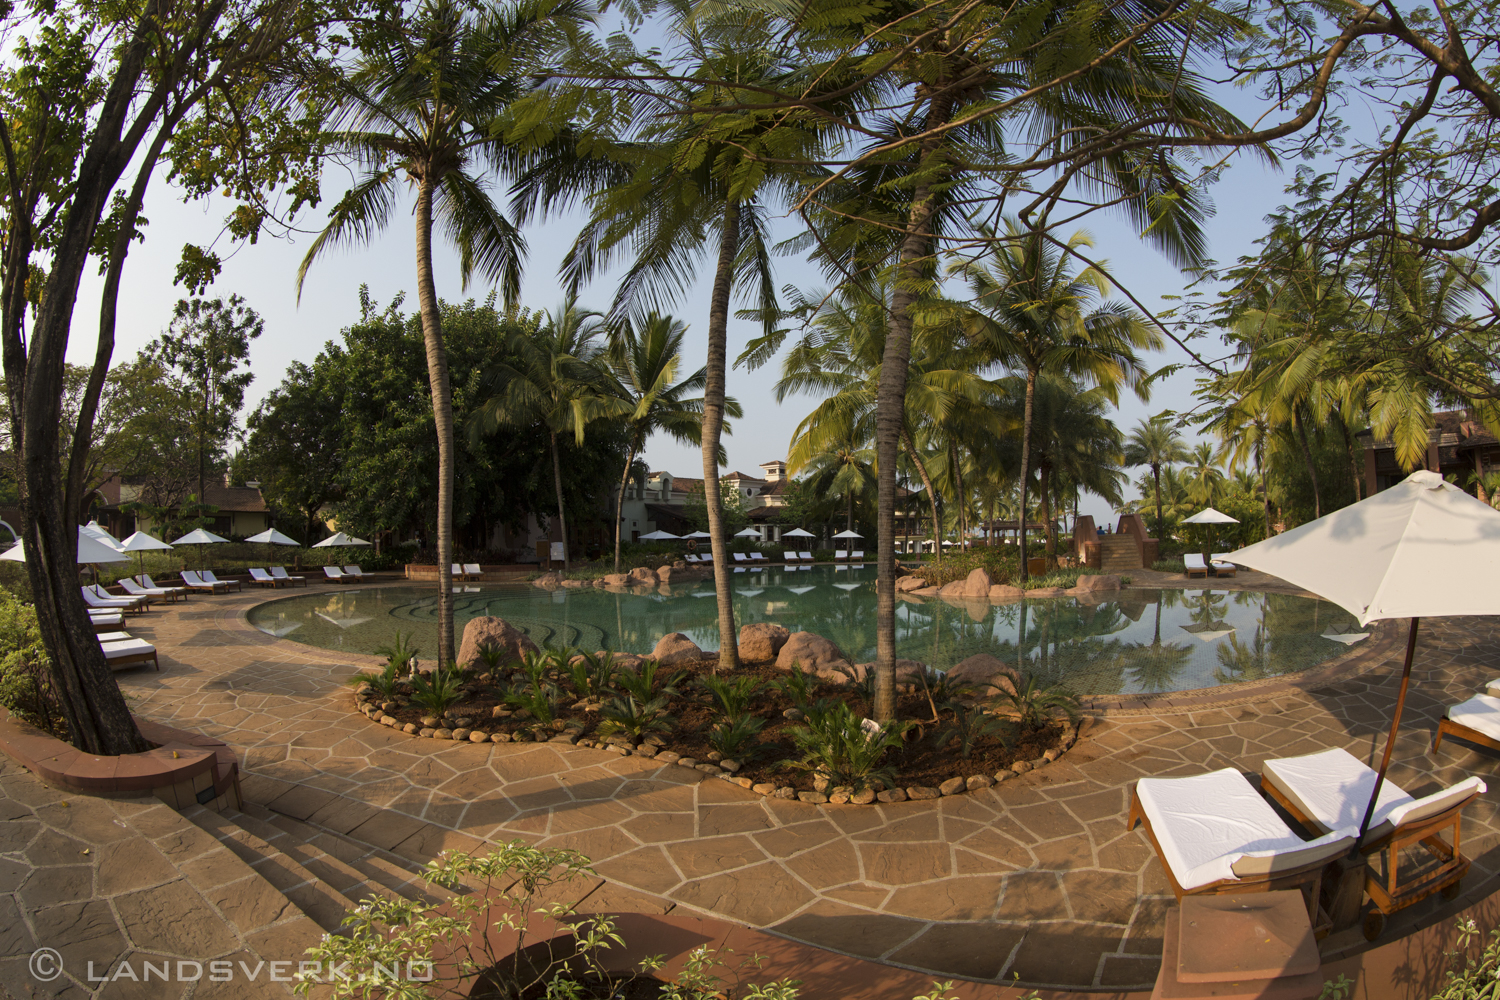 Finally some peace. Goa, India. 

(Canon EOS 5D Mark III / Canon EF 8-15mm f/4 L USM Fisheye)